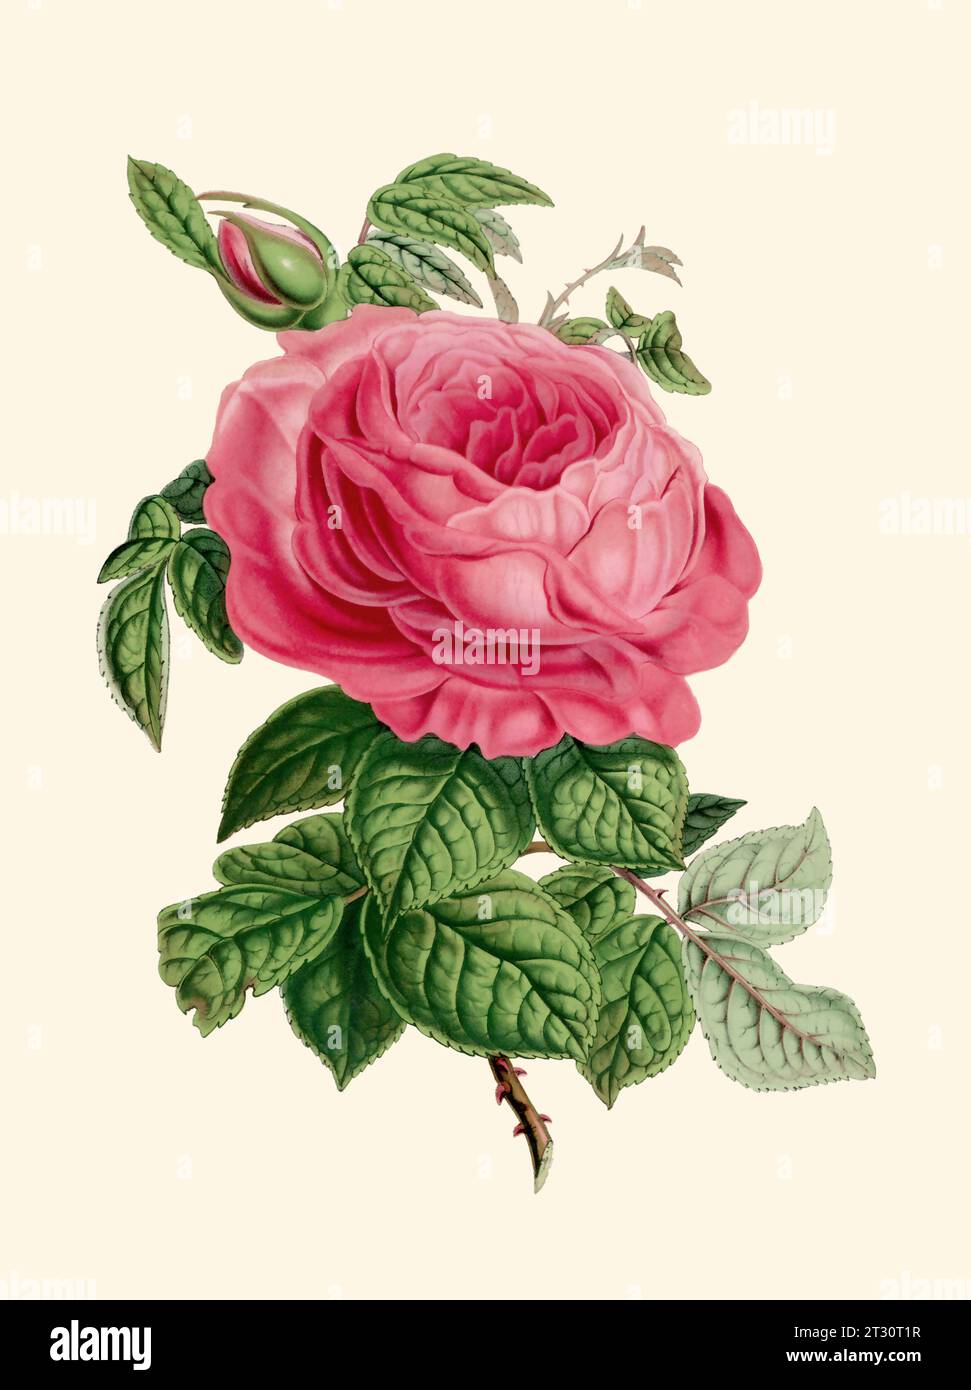 Colorful Rose Flower Illustration: A digital vintage-style flower on a plain beige background. Stock Photo